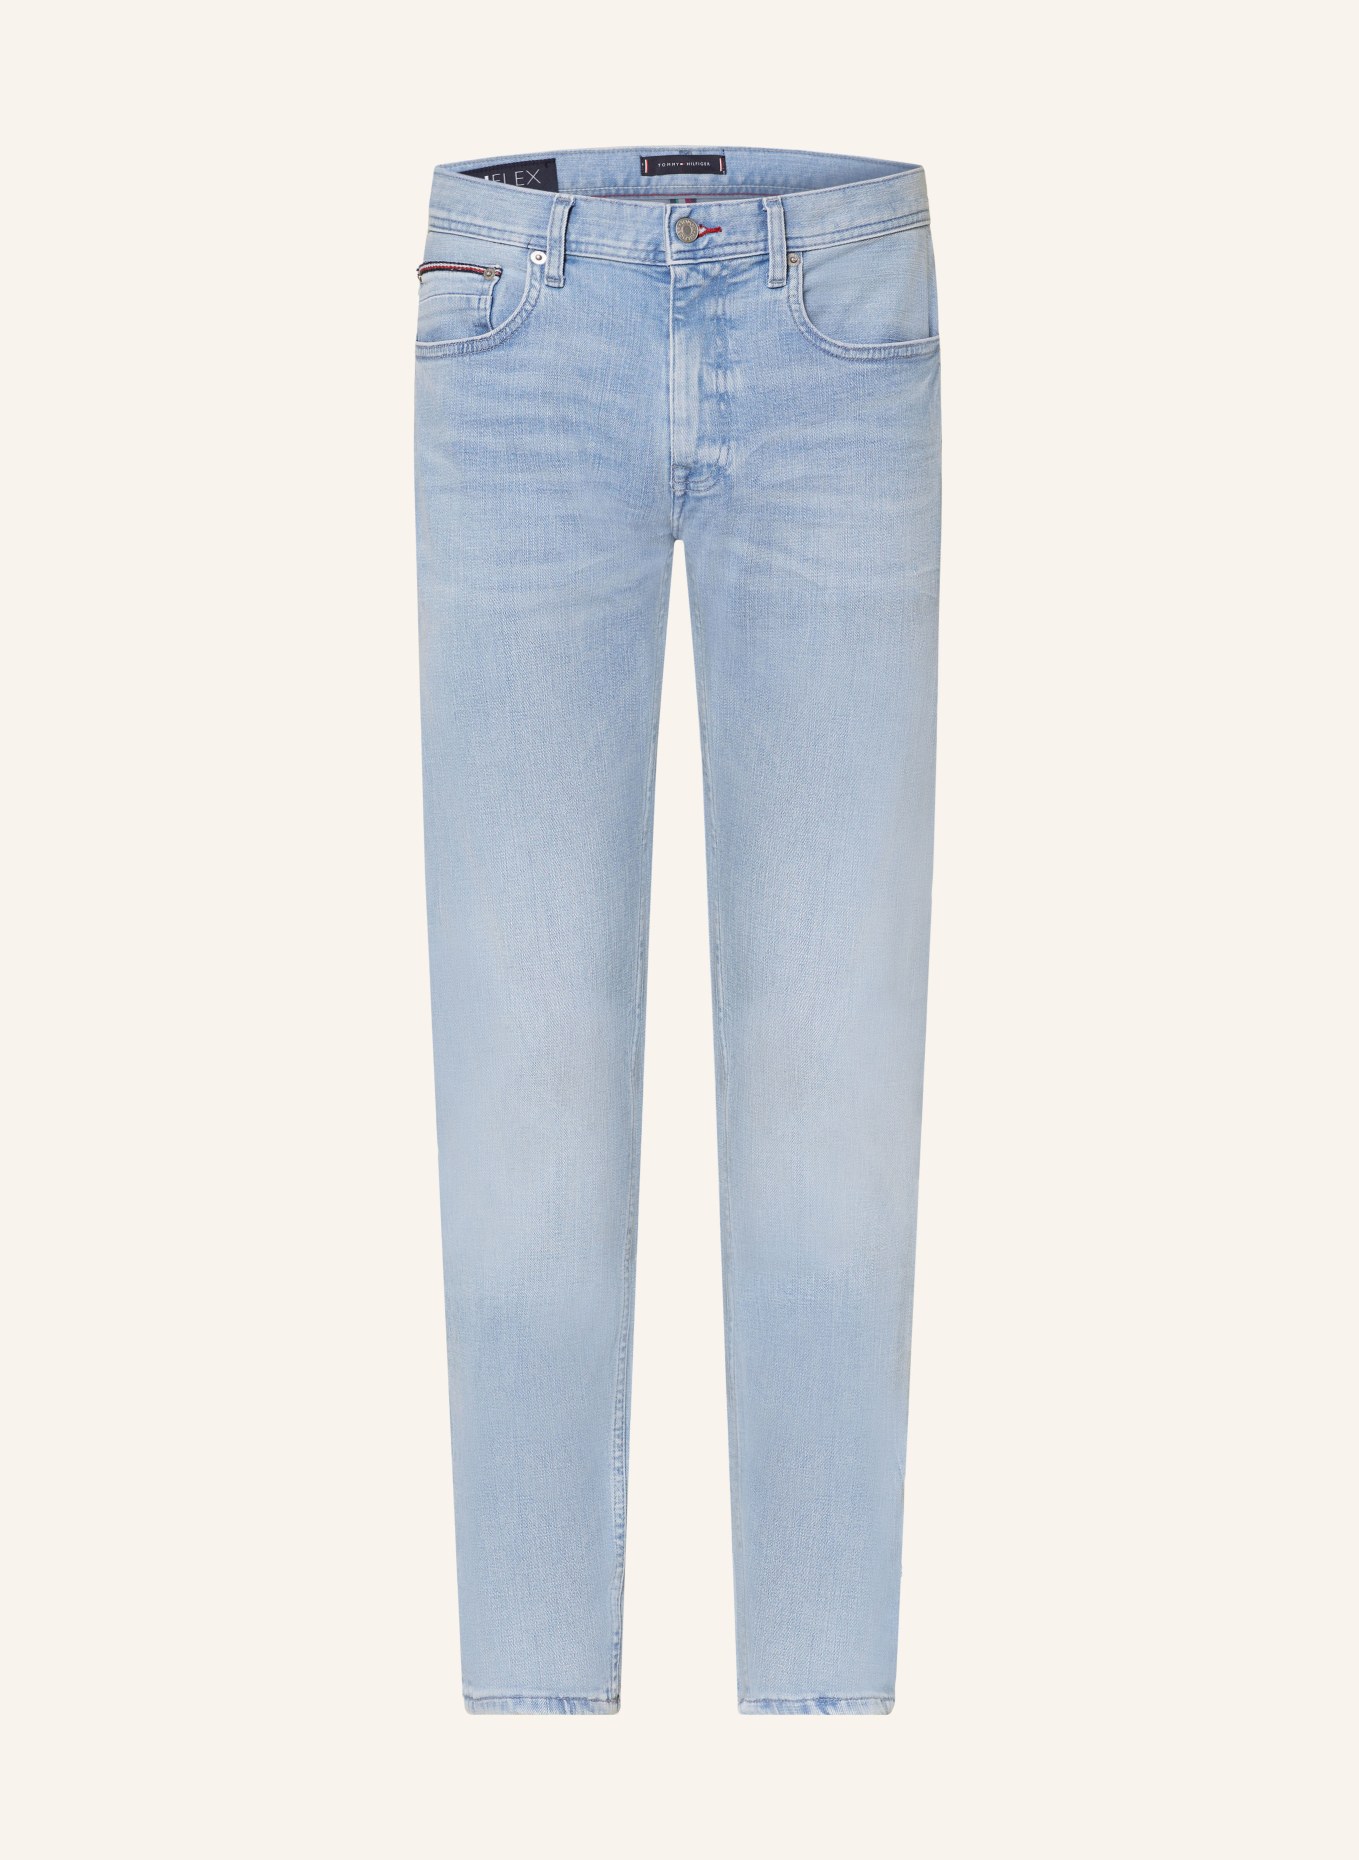 TOMMY HILFIGER Jeans HOUSTON Slim Tapered Fit, Farbe: HELLBLAU (Bild 1)